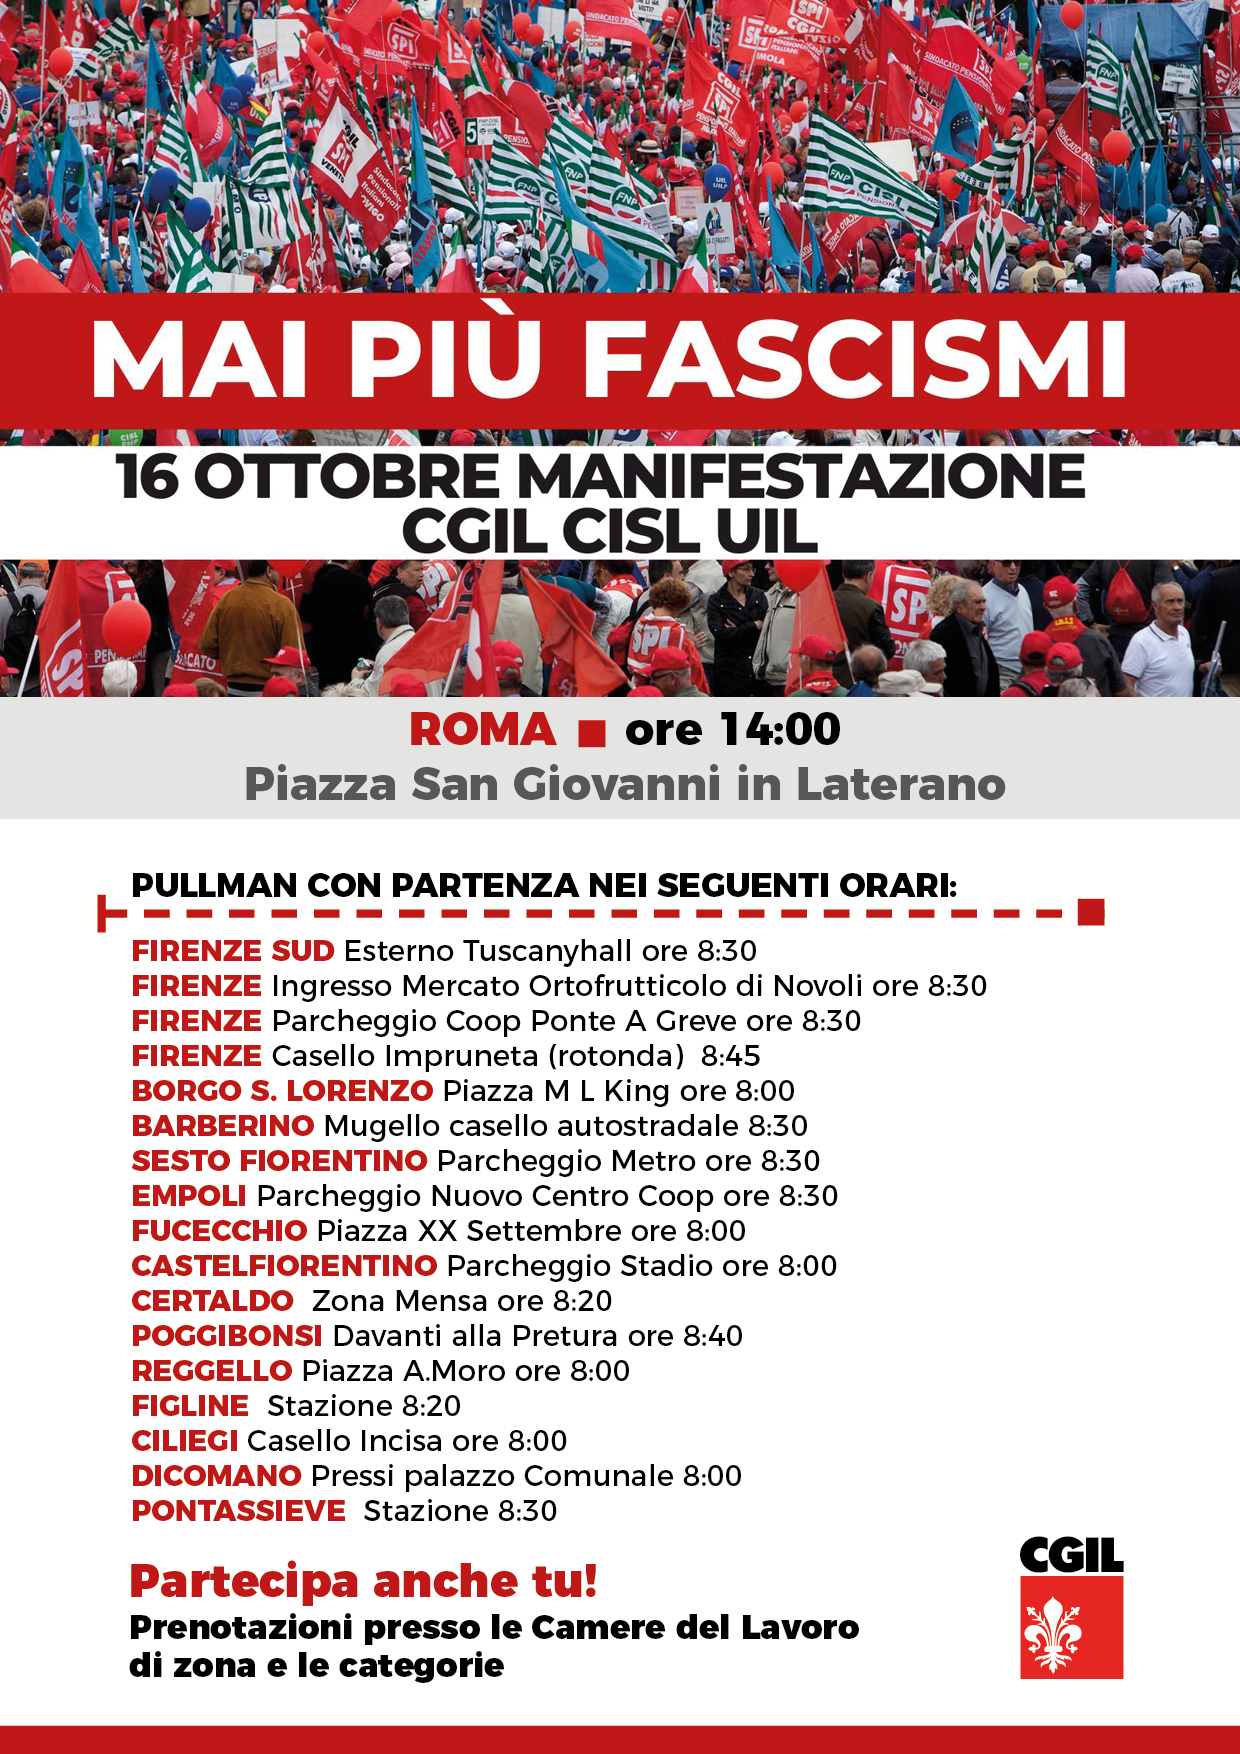 Mai più fascismi, Roma 16 ottobre 